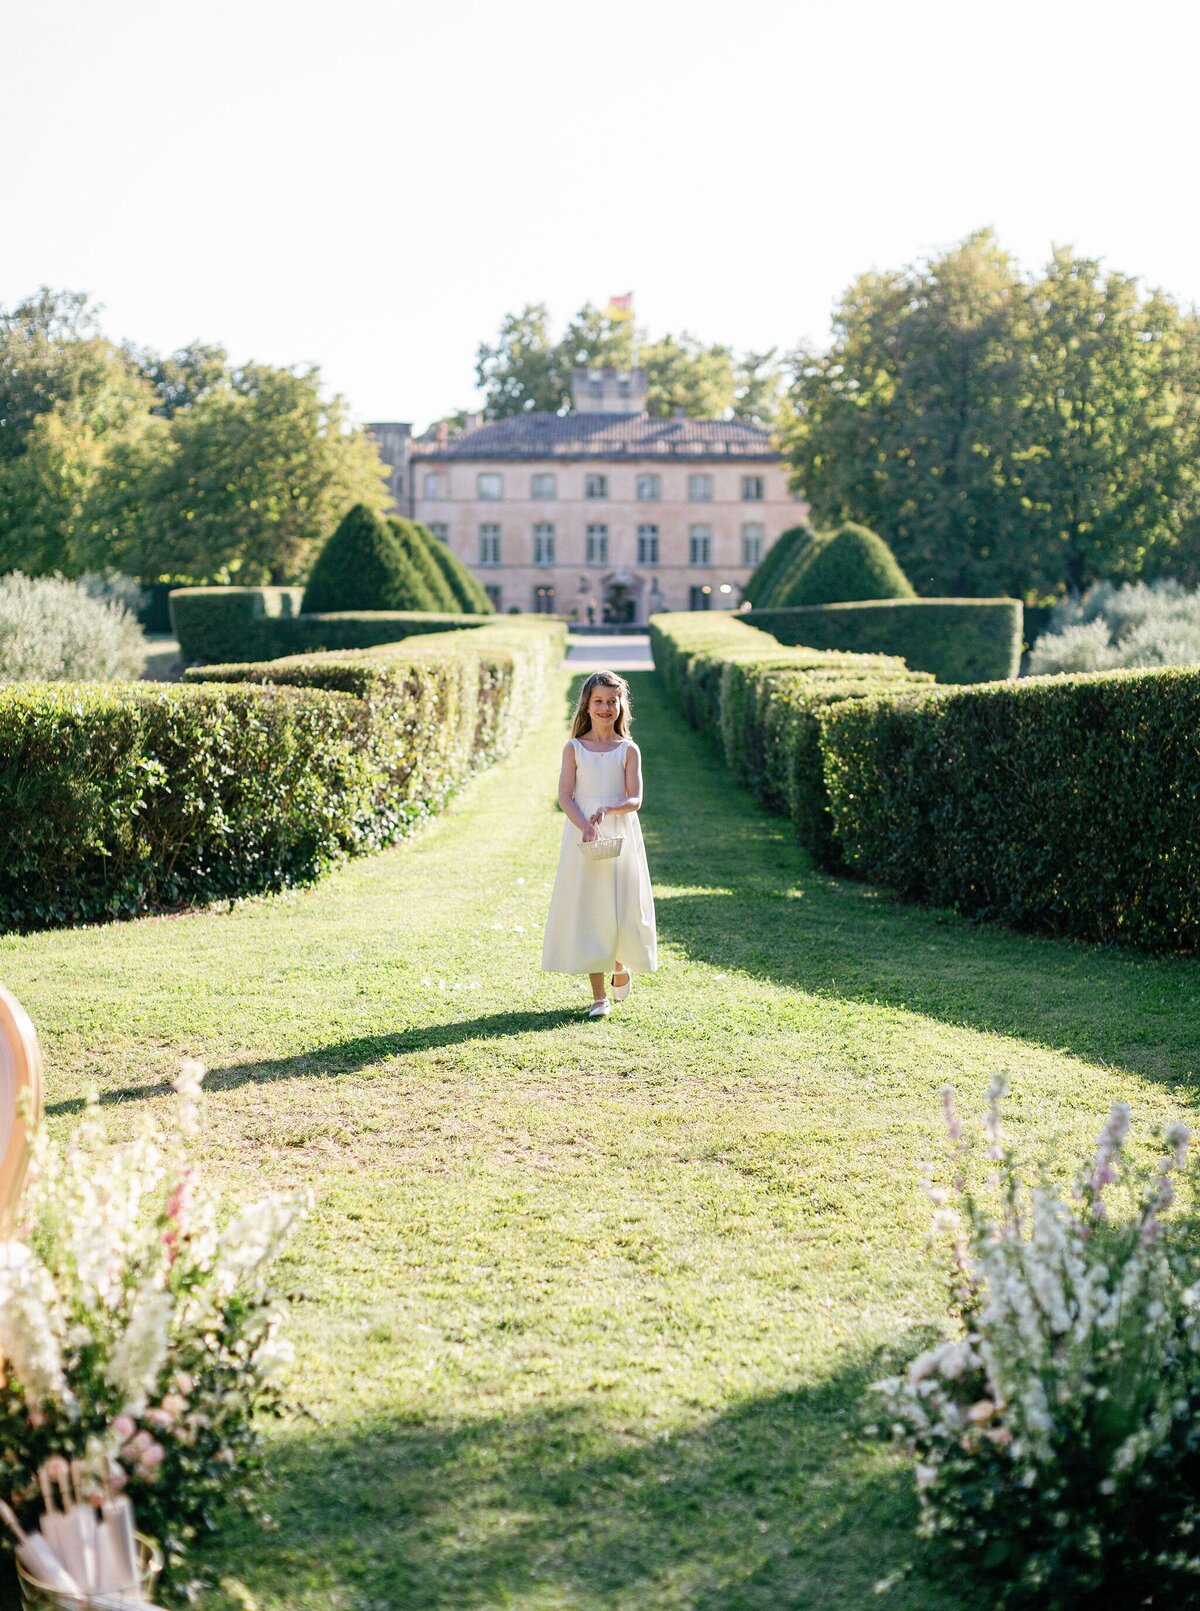 Flower-girl-wedding-aisle-chateau-France